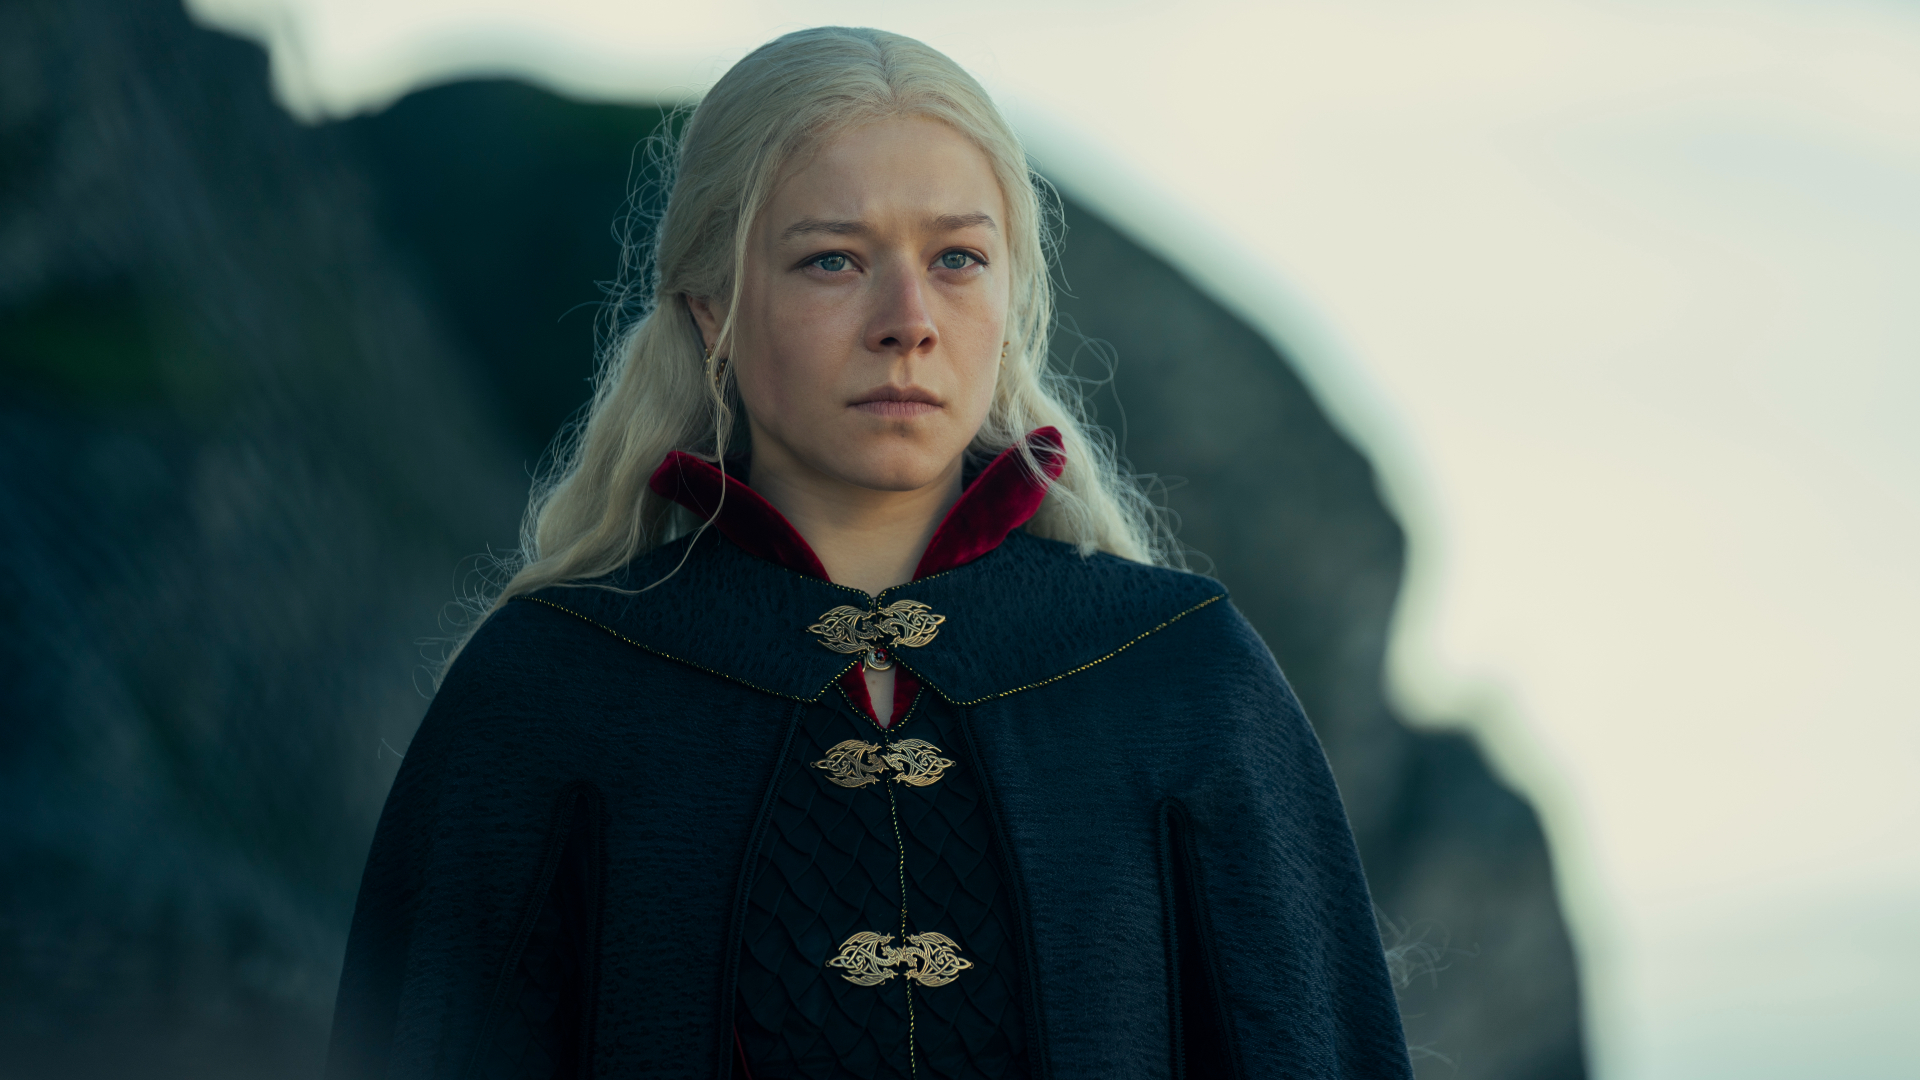 Emma D'Arcy as Princess Rhaenyra Targaryen in House of the Dragon season 1